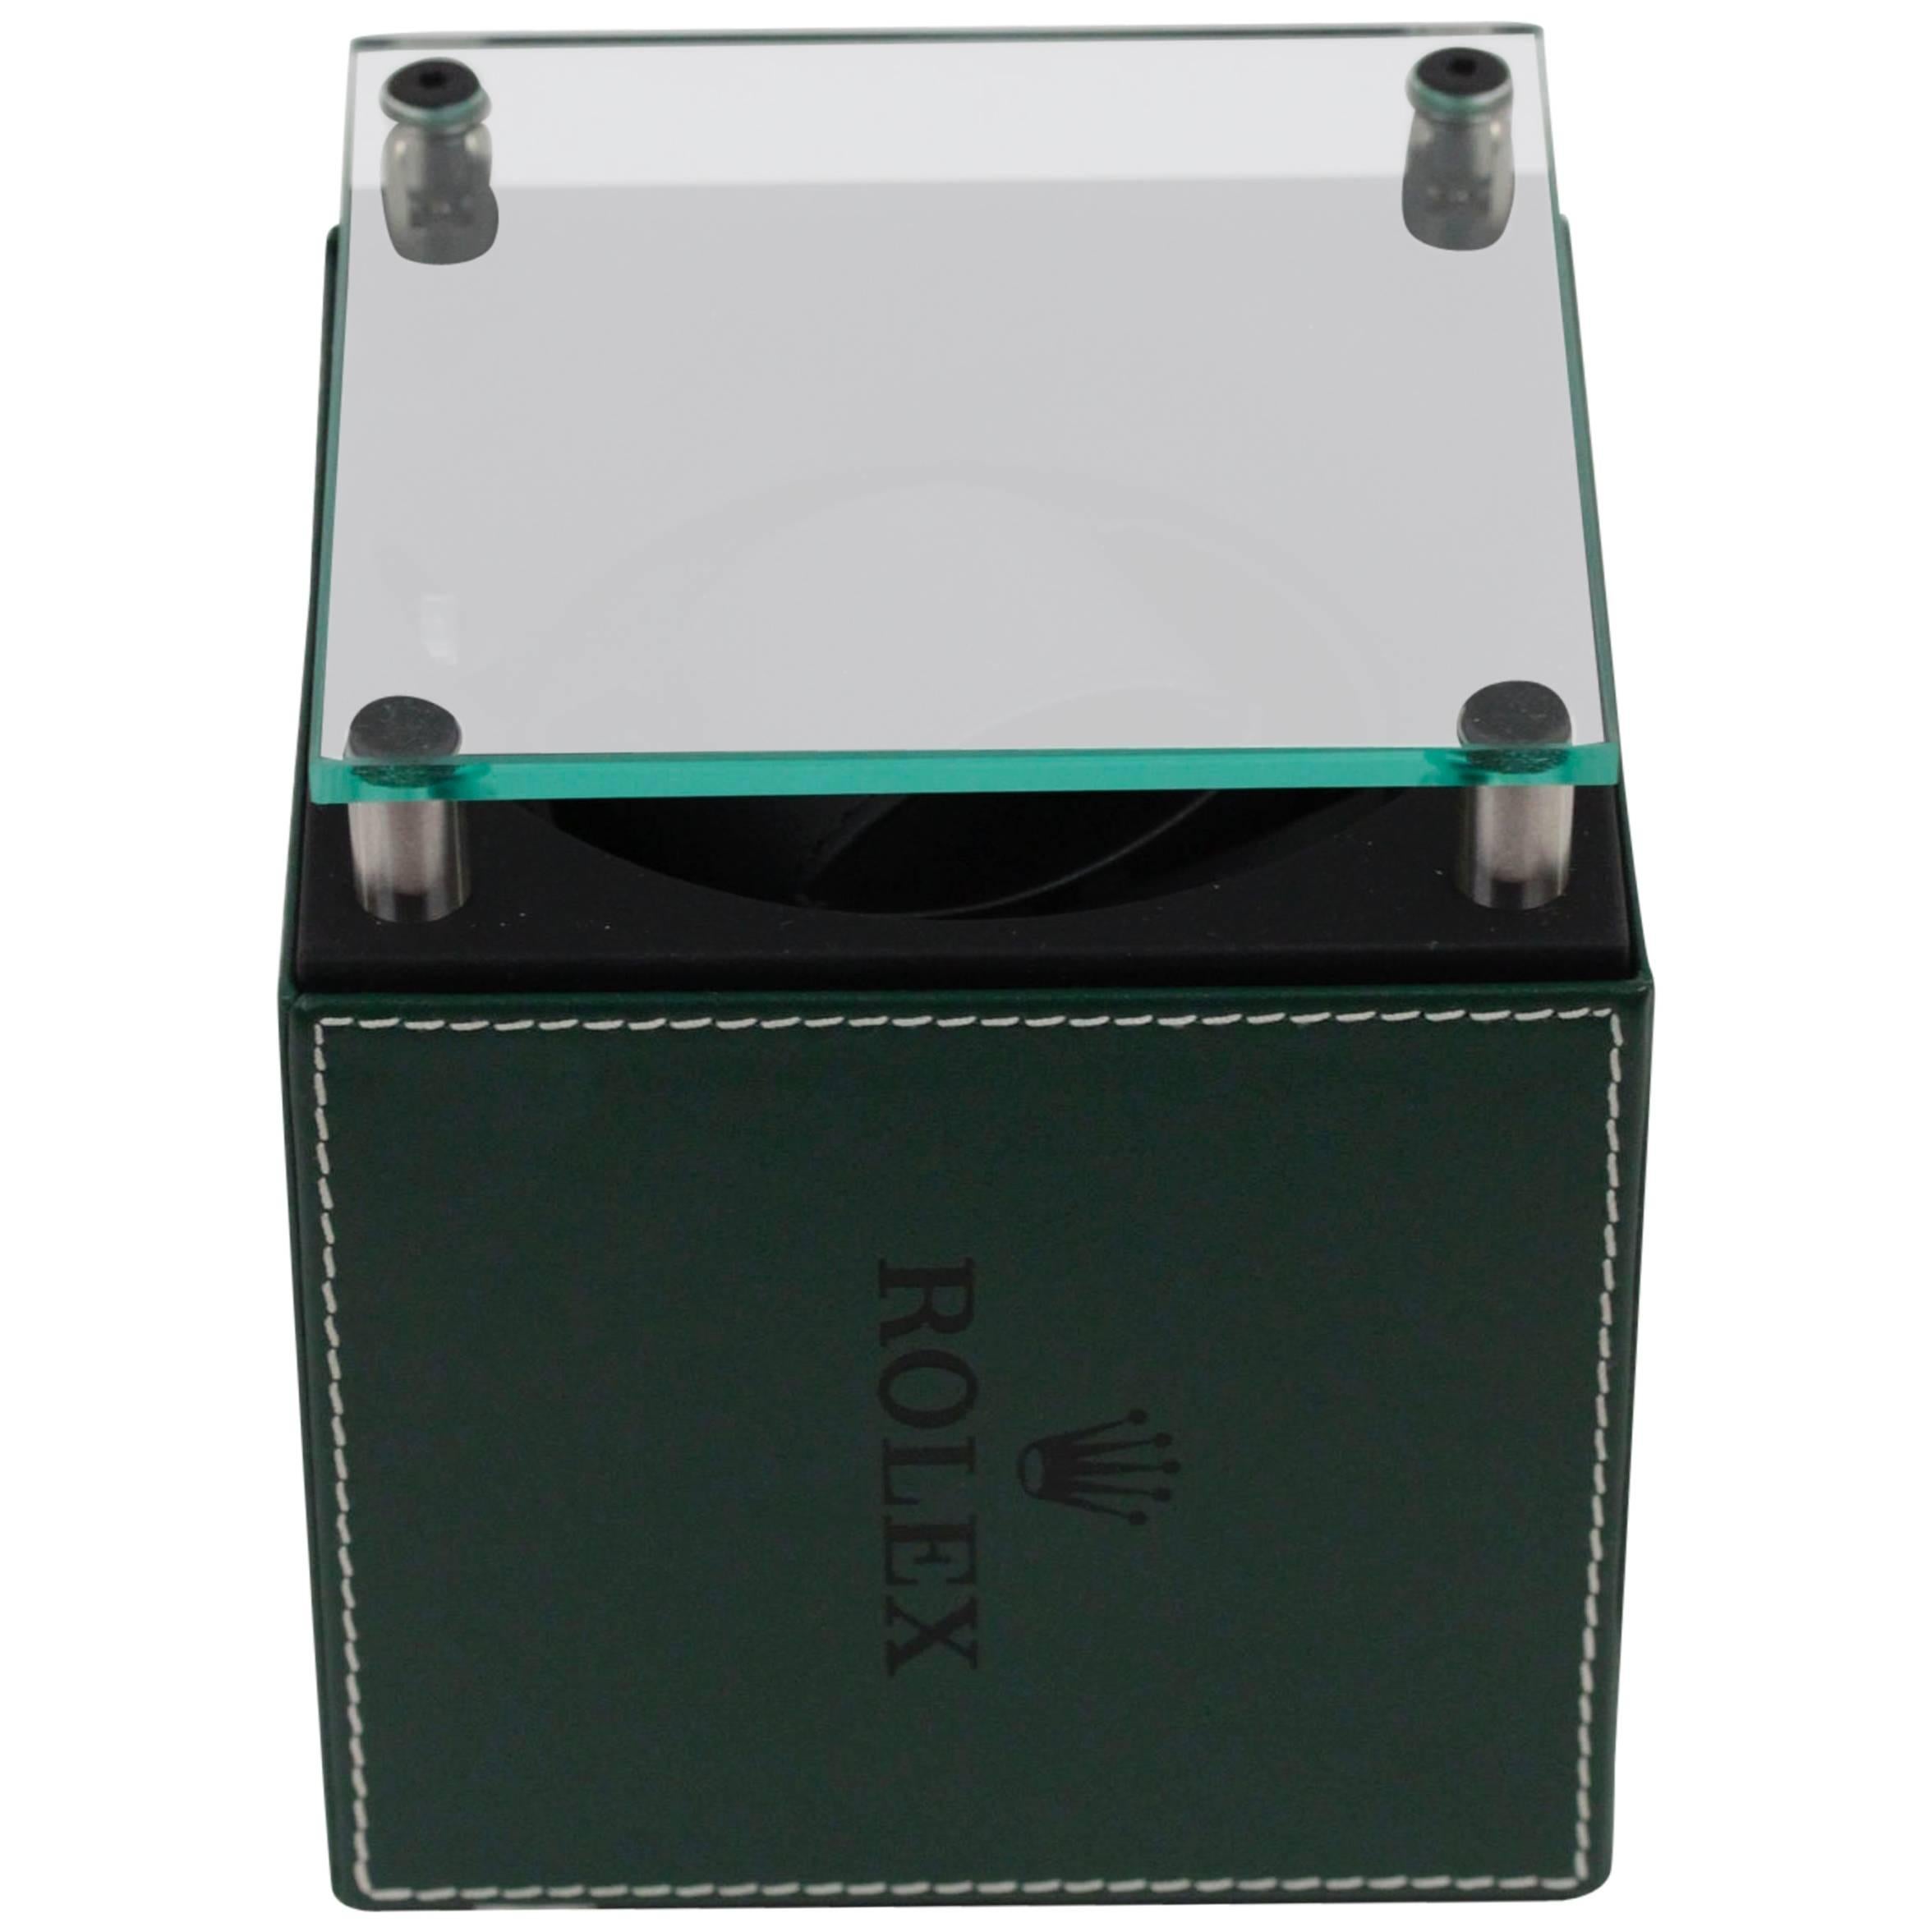  ROLEX Green Leather WATCH WINDER Swiss Made CASE w/ BOX Rare